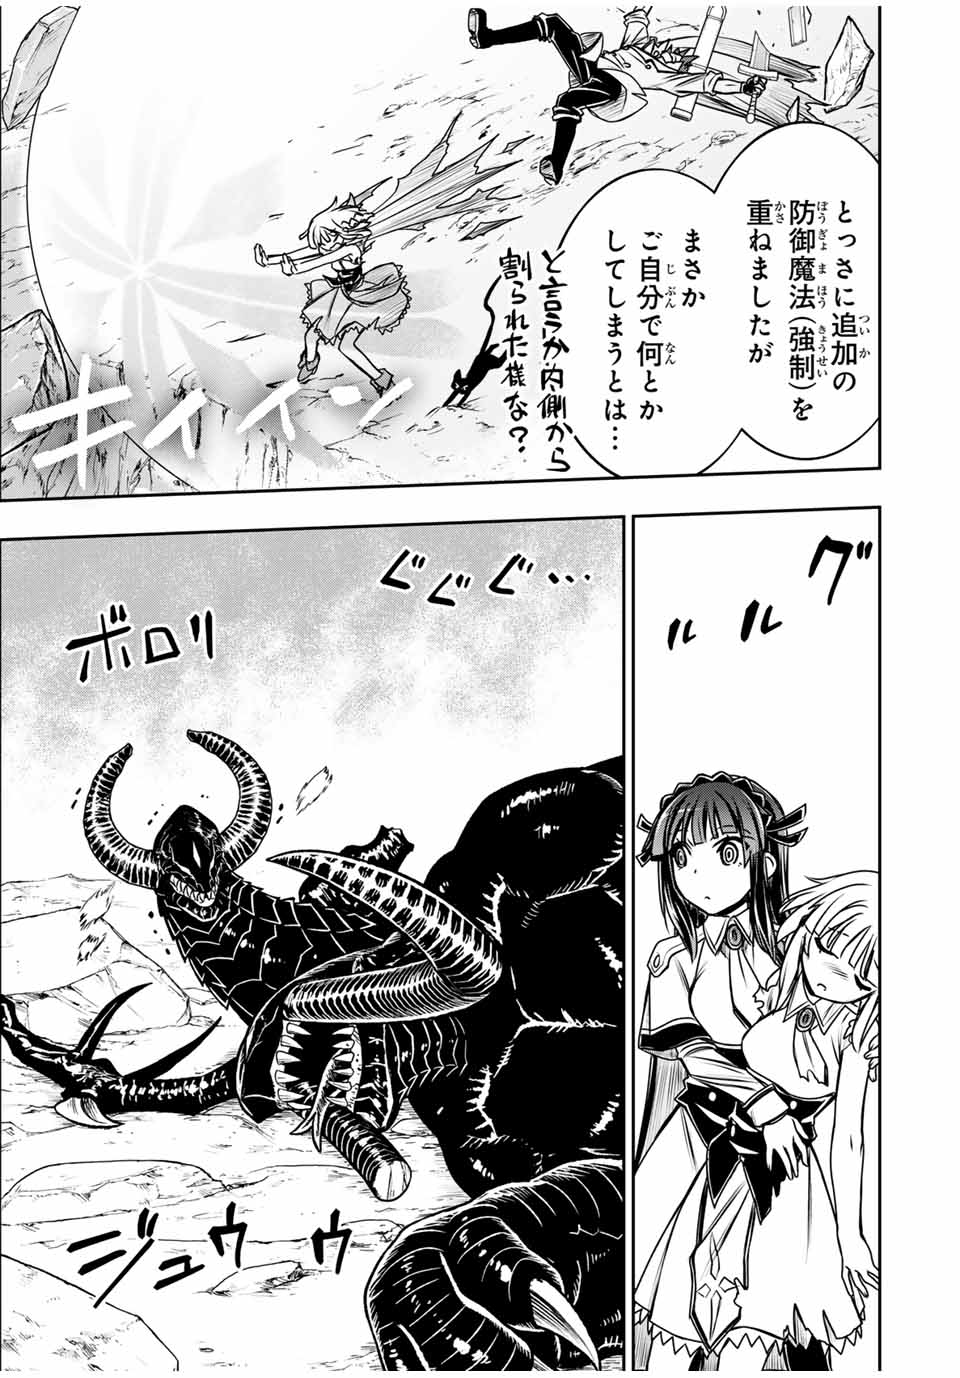 Nengan no Akuyaku Reijou (Last Boss) no Karada wo Teniiretazo!  - Chapter 23 - Page 15